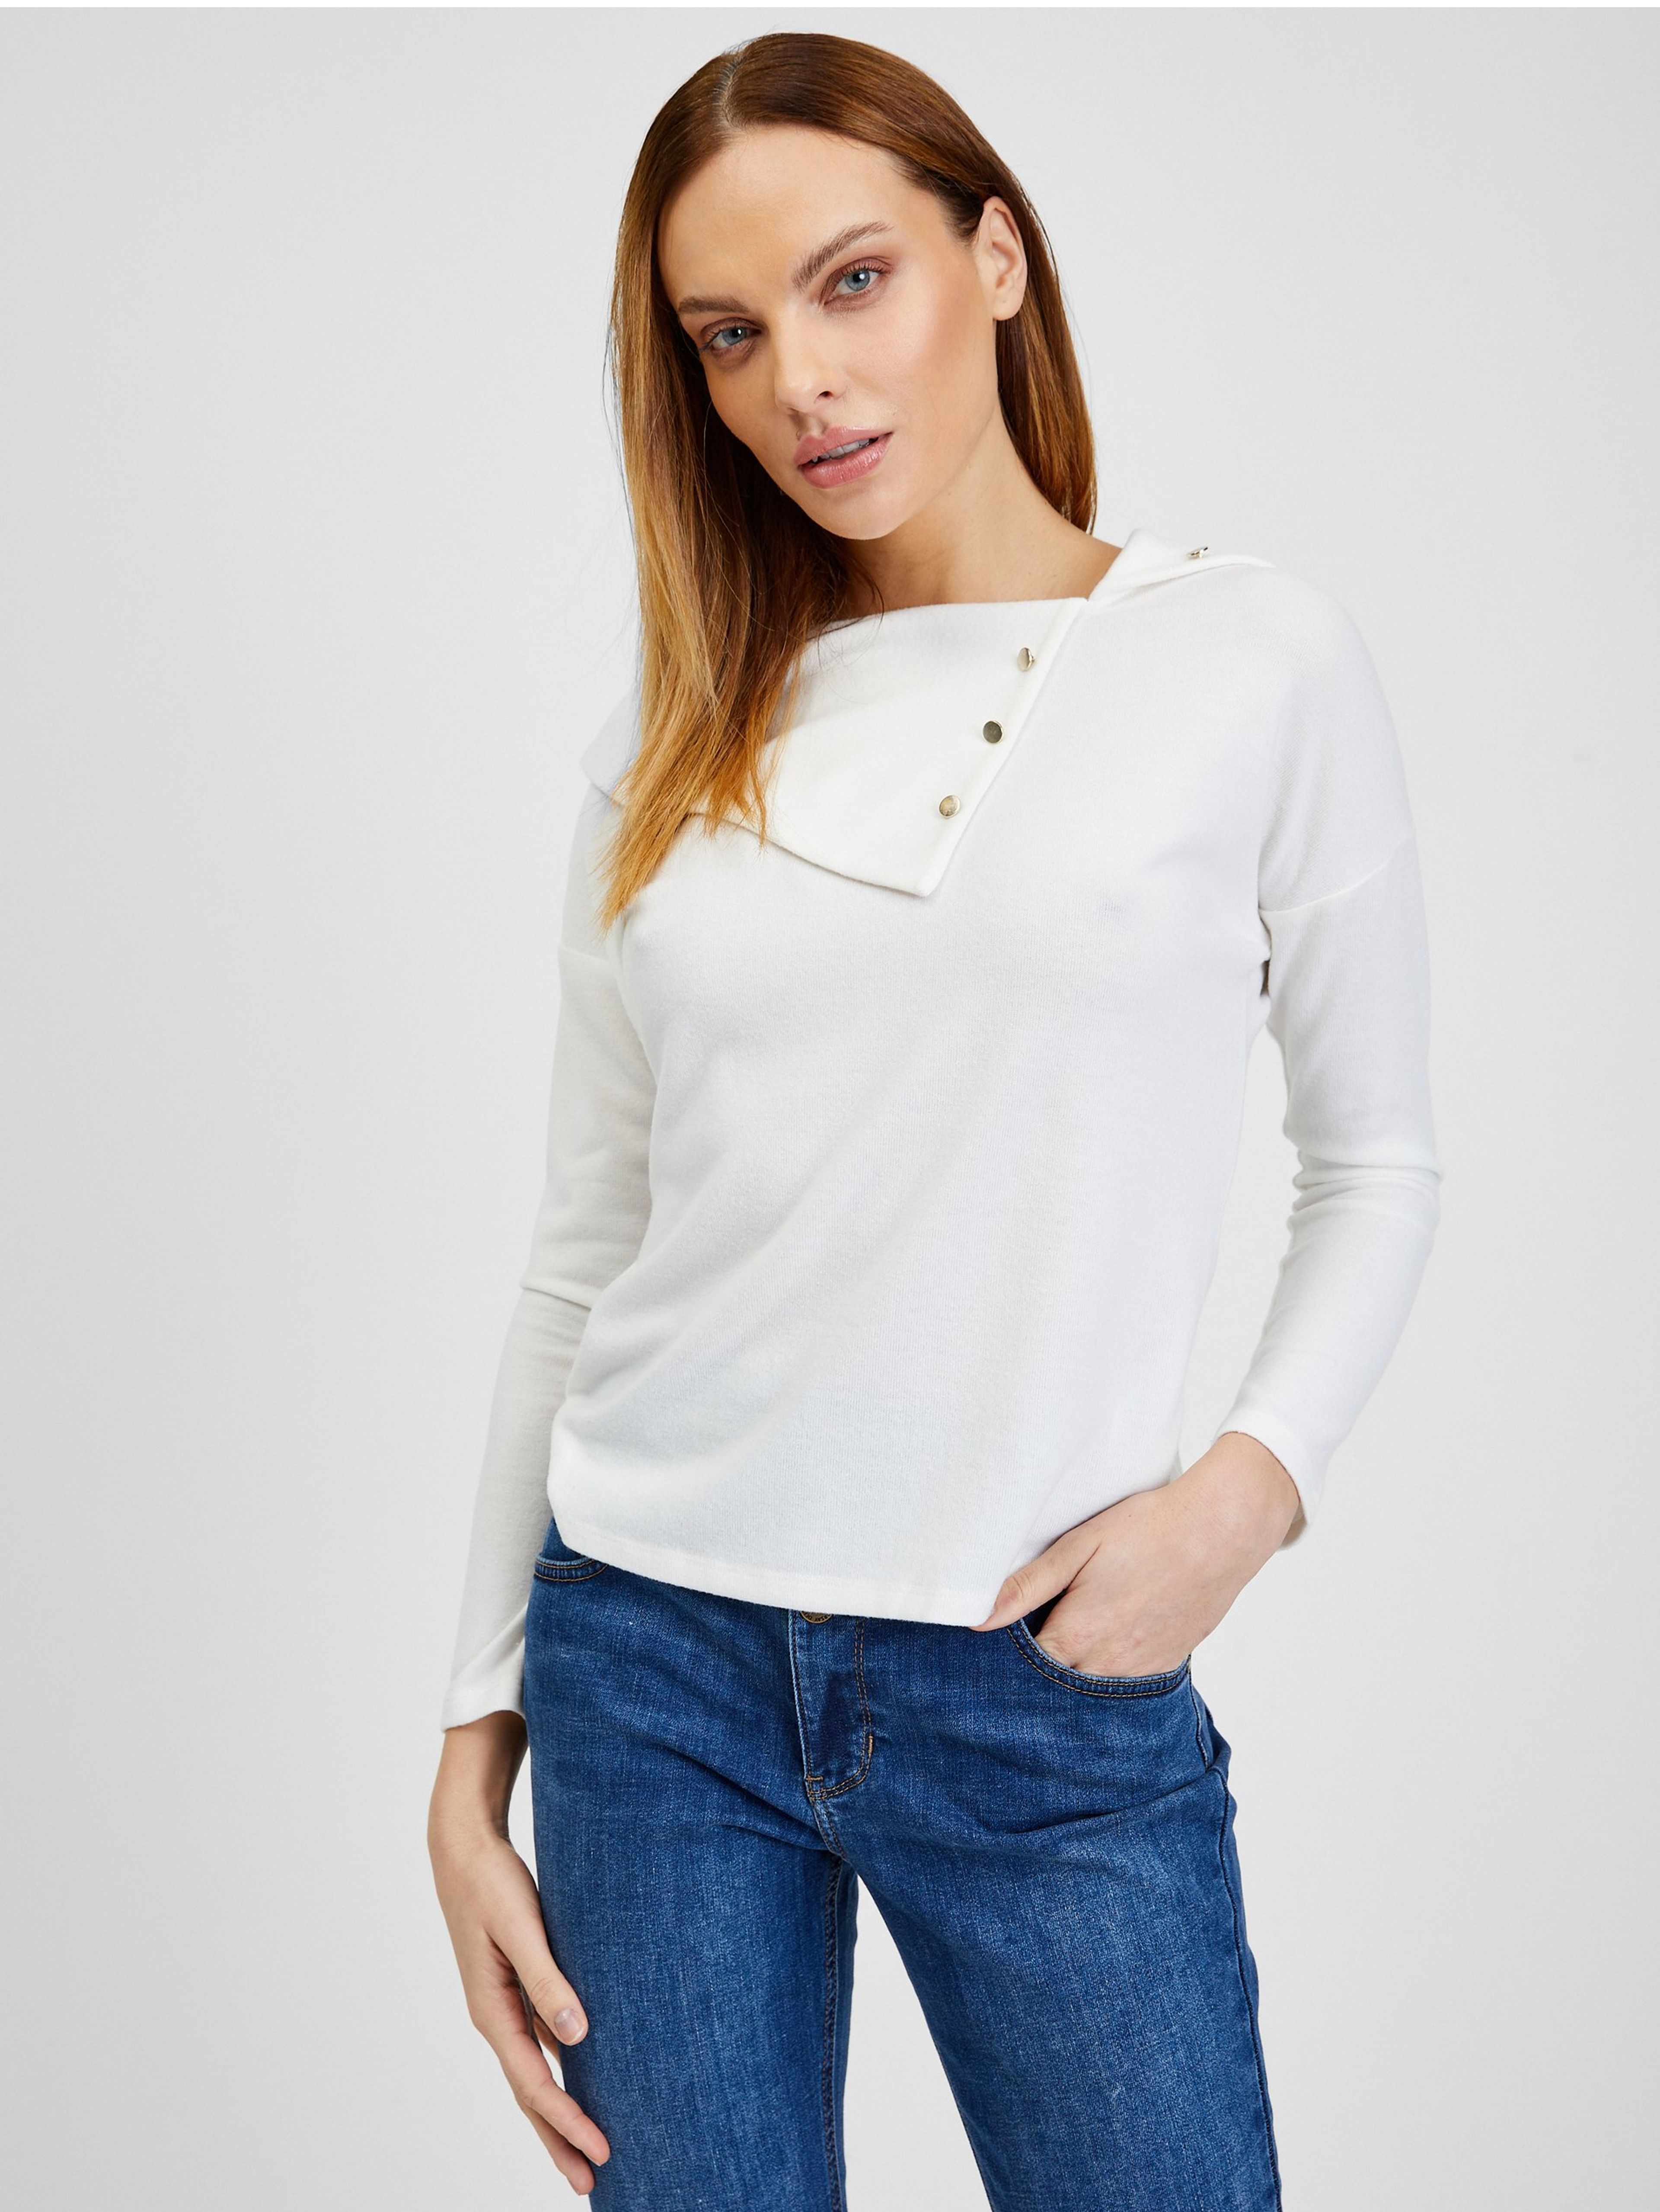 Biały damski T-shirt z ozdobnymi detalami ORSAY